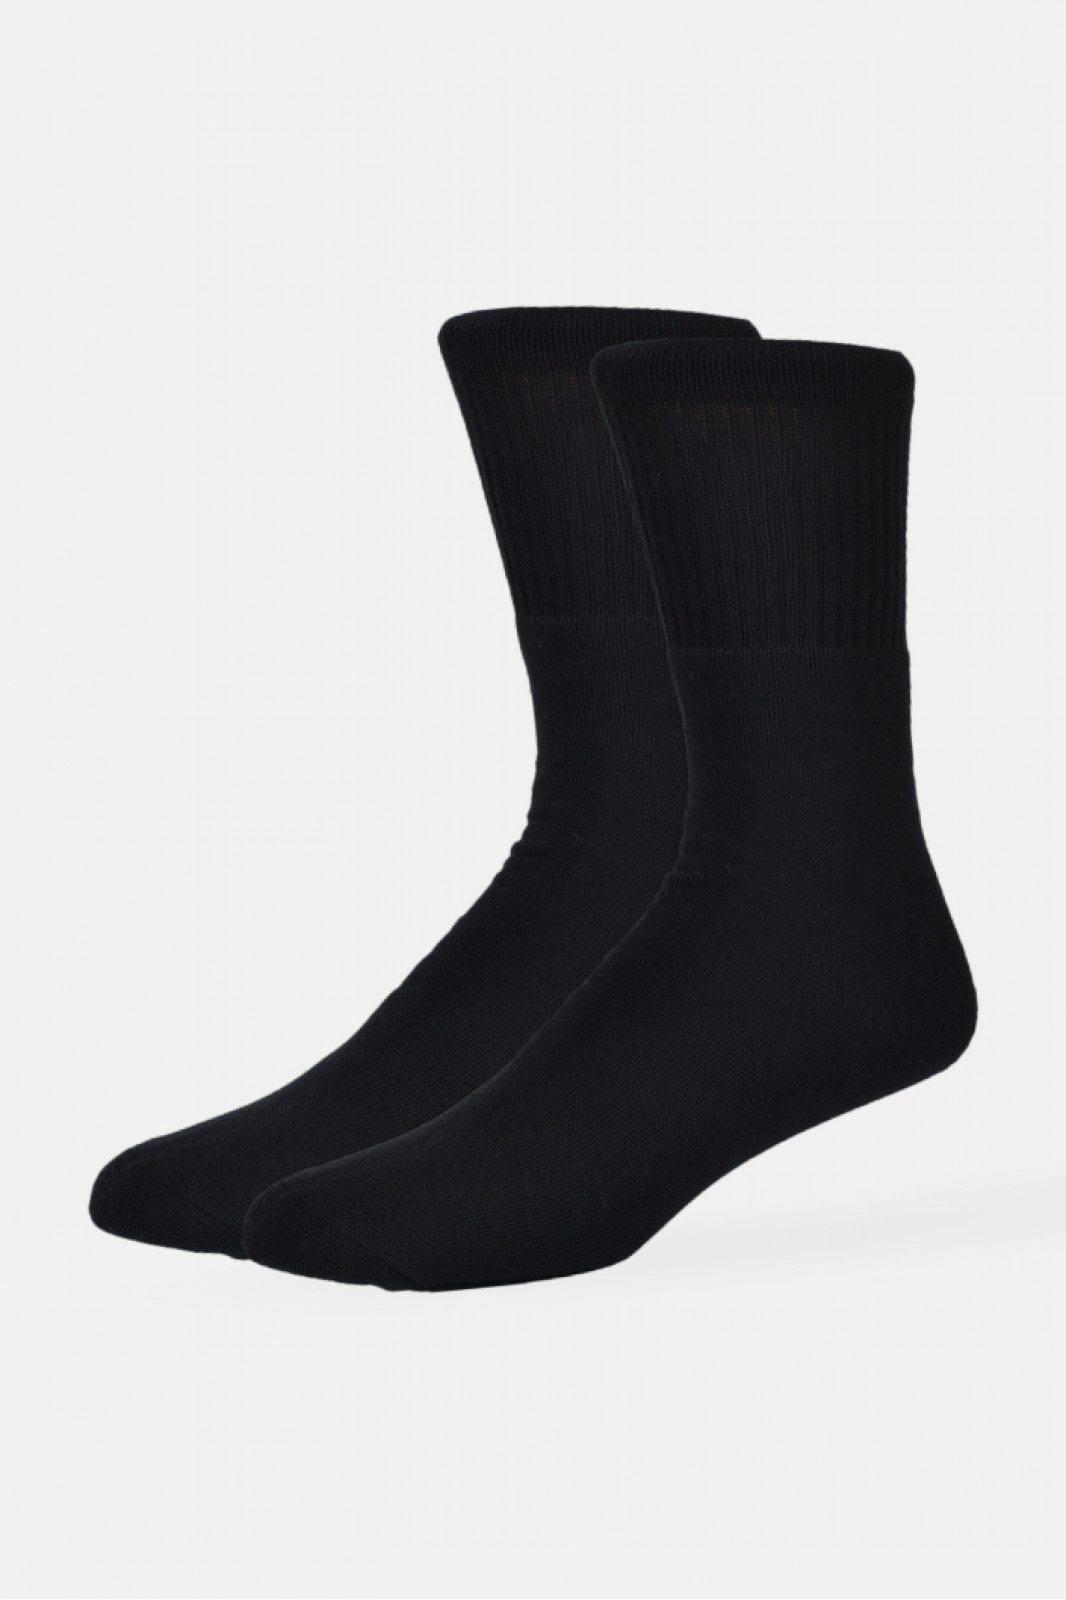 Plain Socks in black and white AMPO